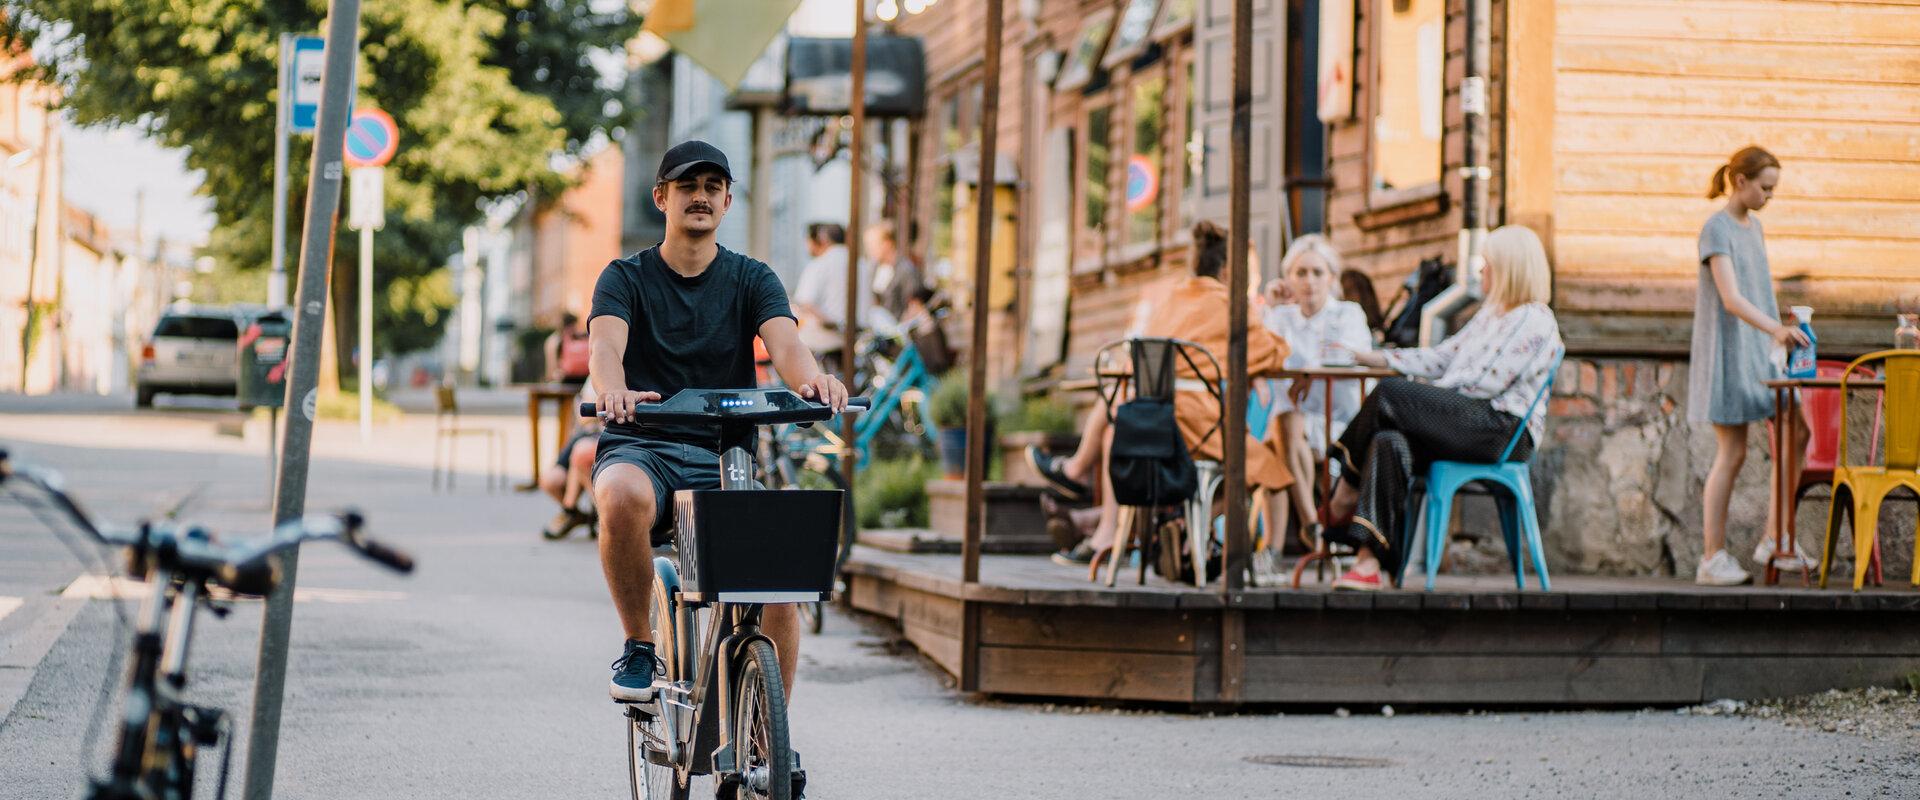 Virtual tour of the city of Tartu: Karlova district wooden architecture, bike share, summer